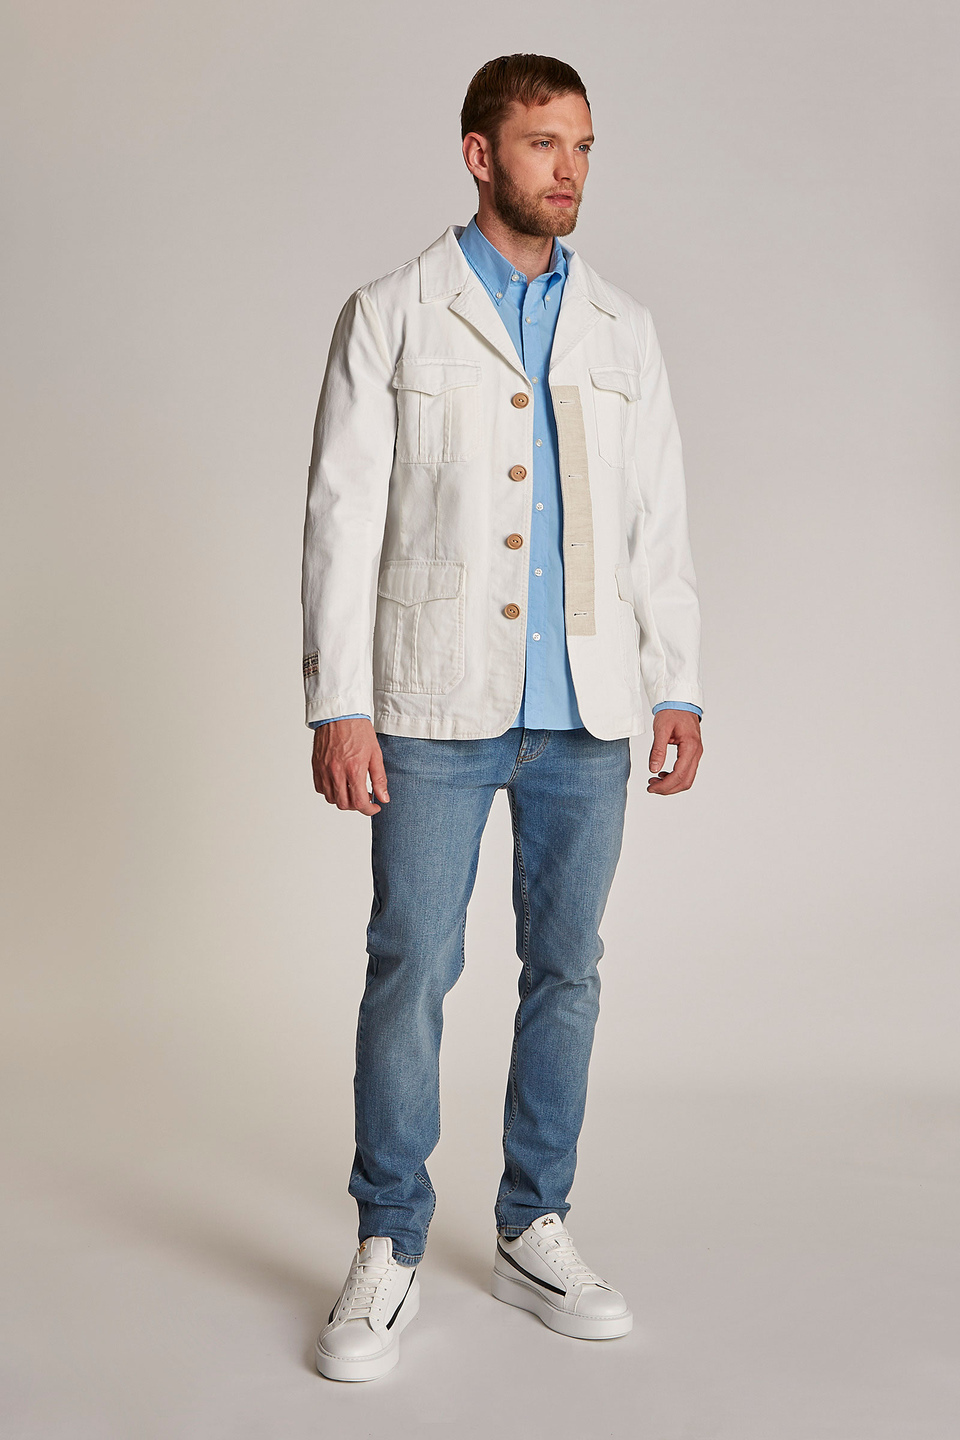 Men's regular-fit 100% cotton Saharan jacket | La Martina - Official Online Shop